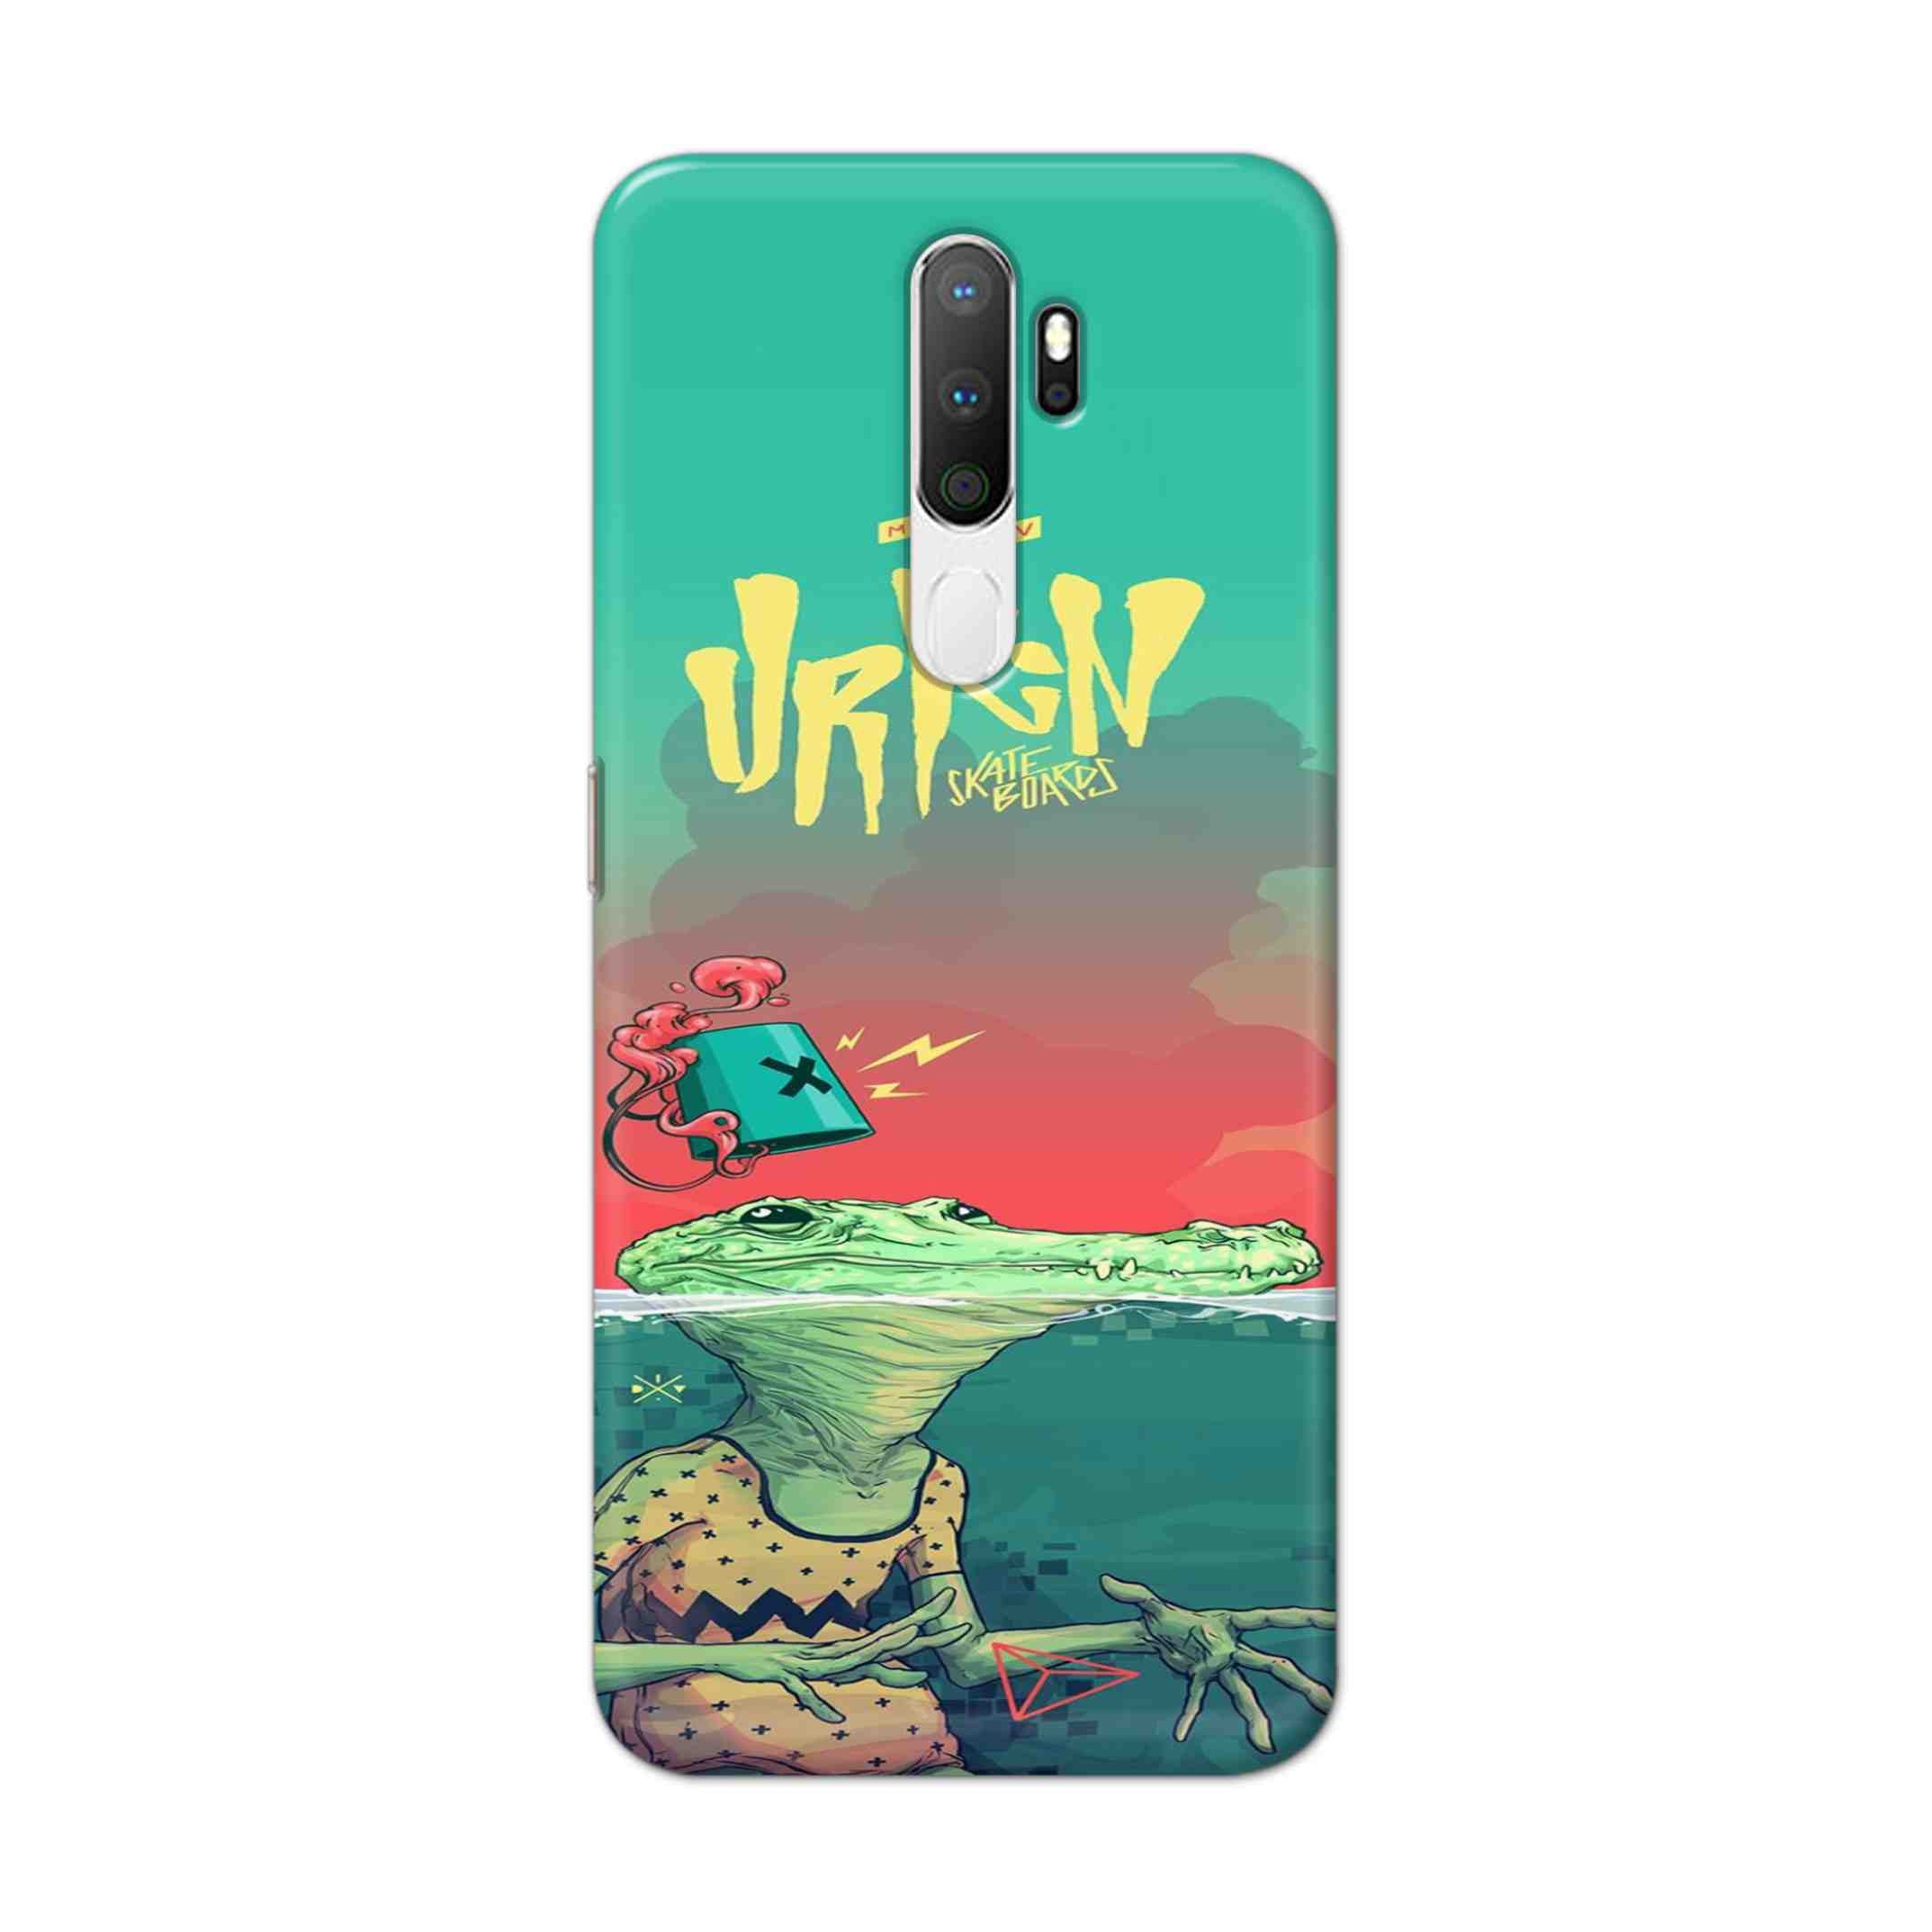 Buy Urkin Hard Back Mobile Phone Case Cover For Oppo A5 (2020) Online